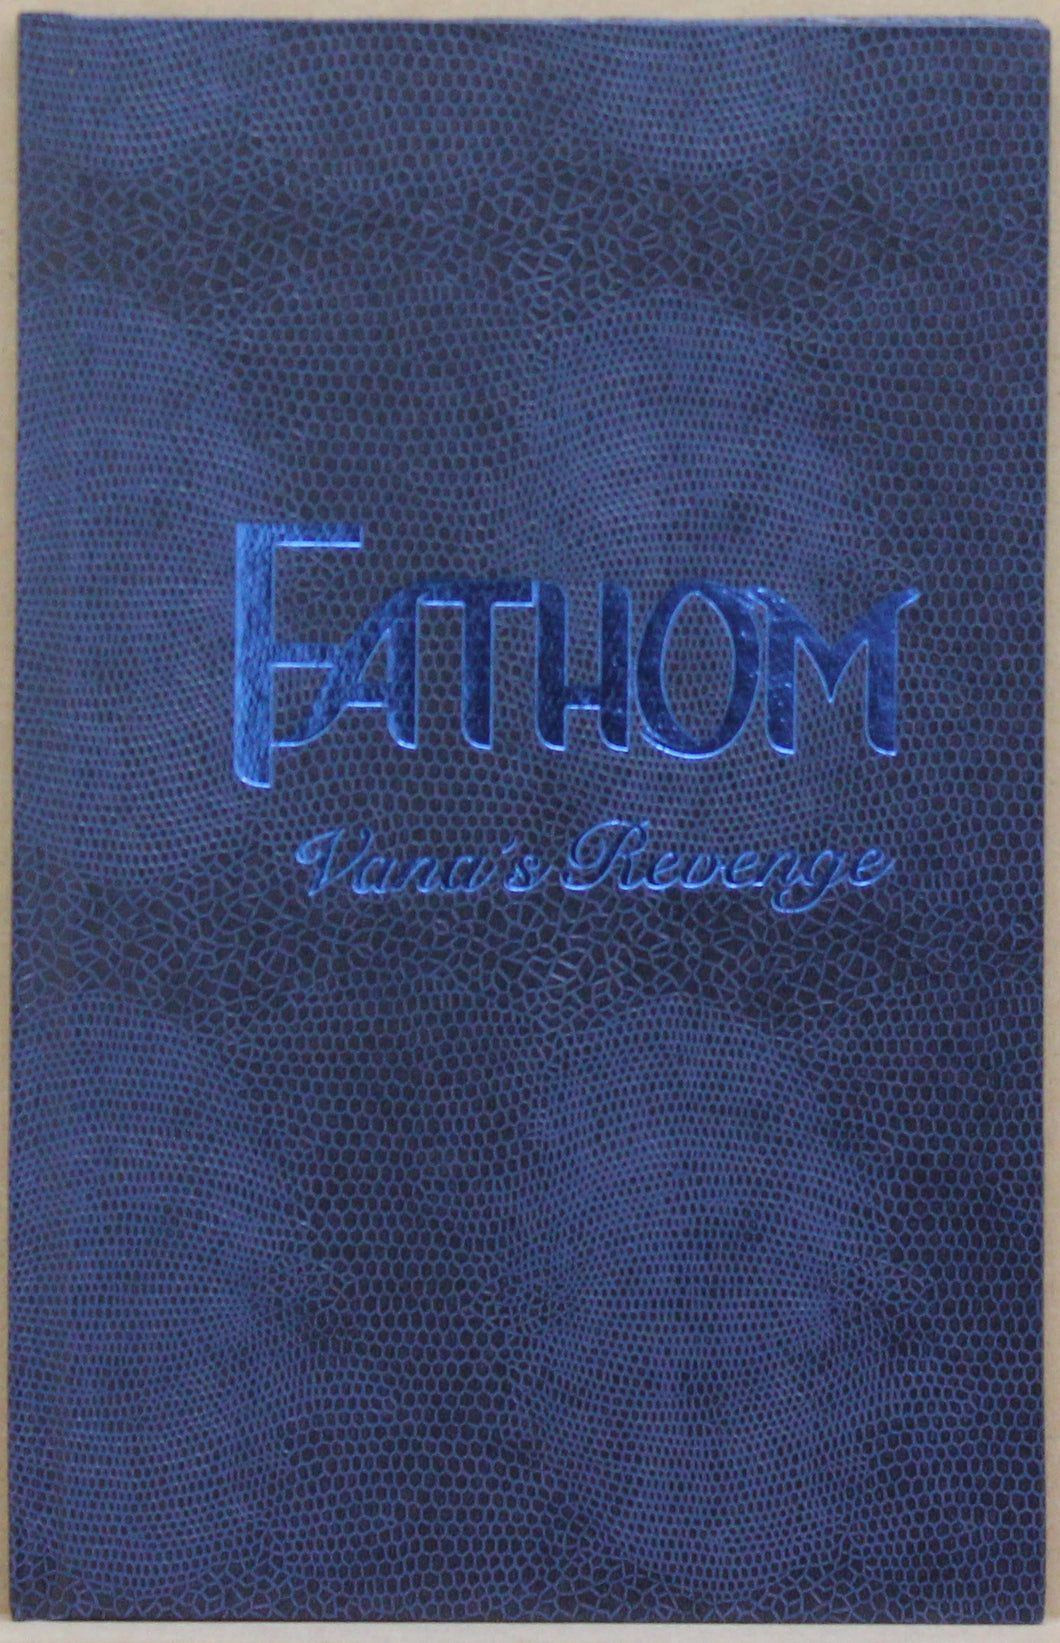 Fathom - Vana's Revenge